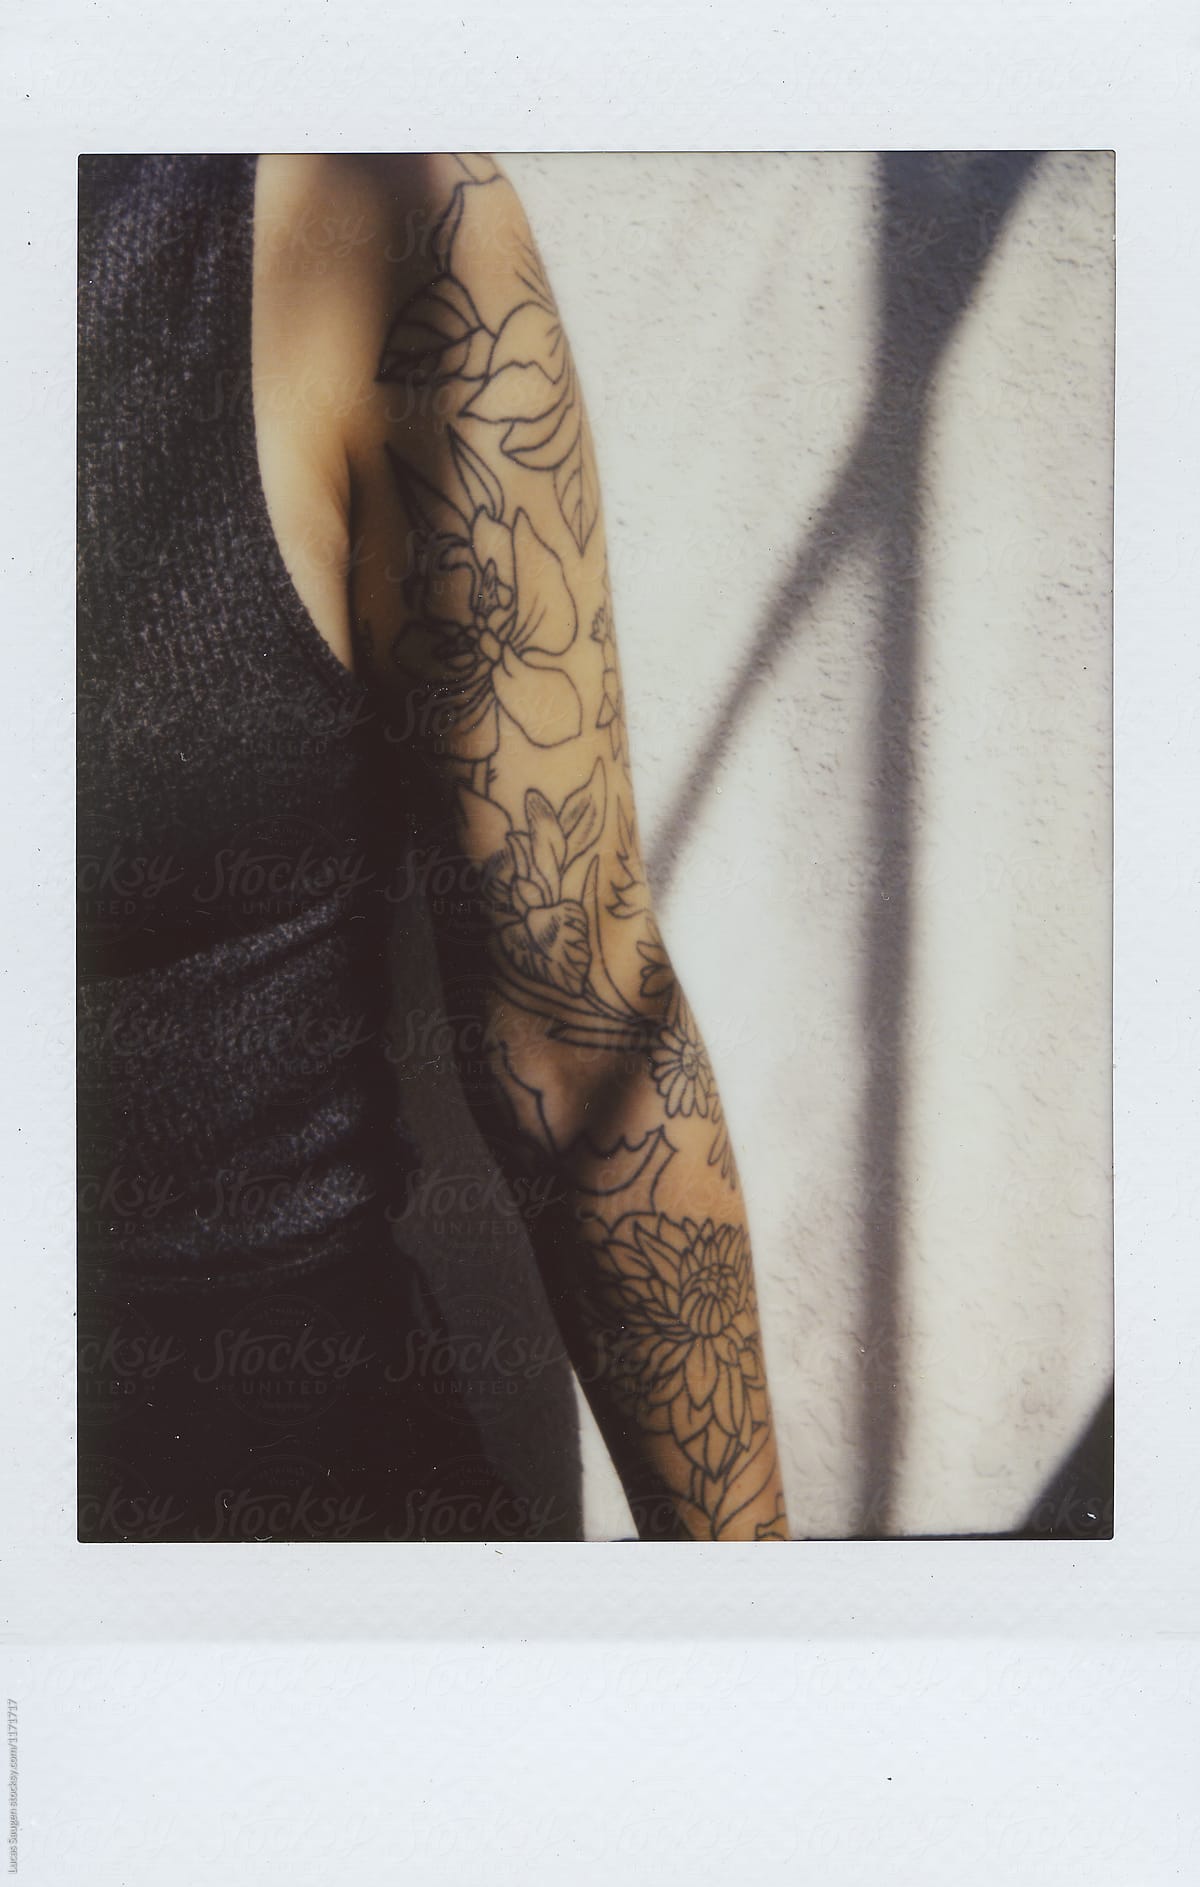 Polaroid of hand in tattoos